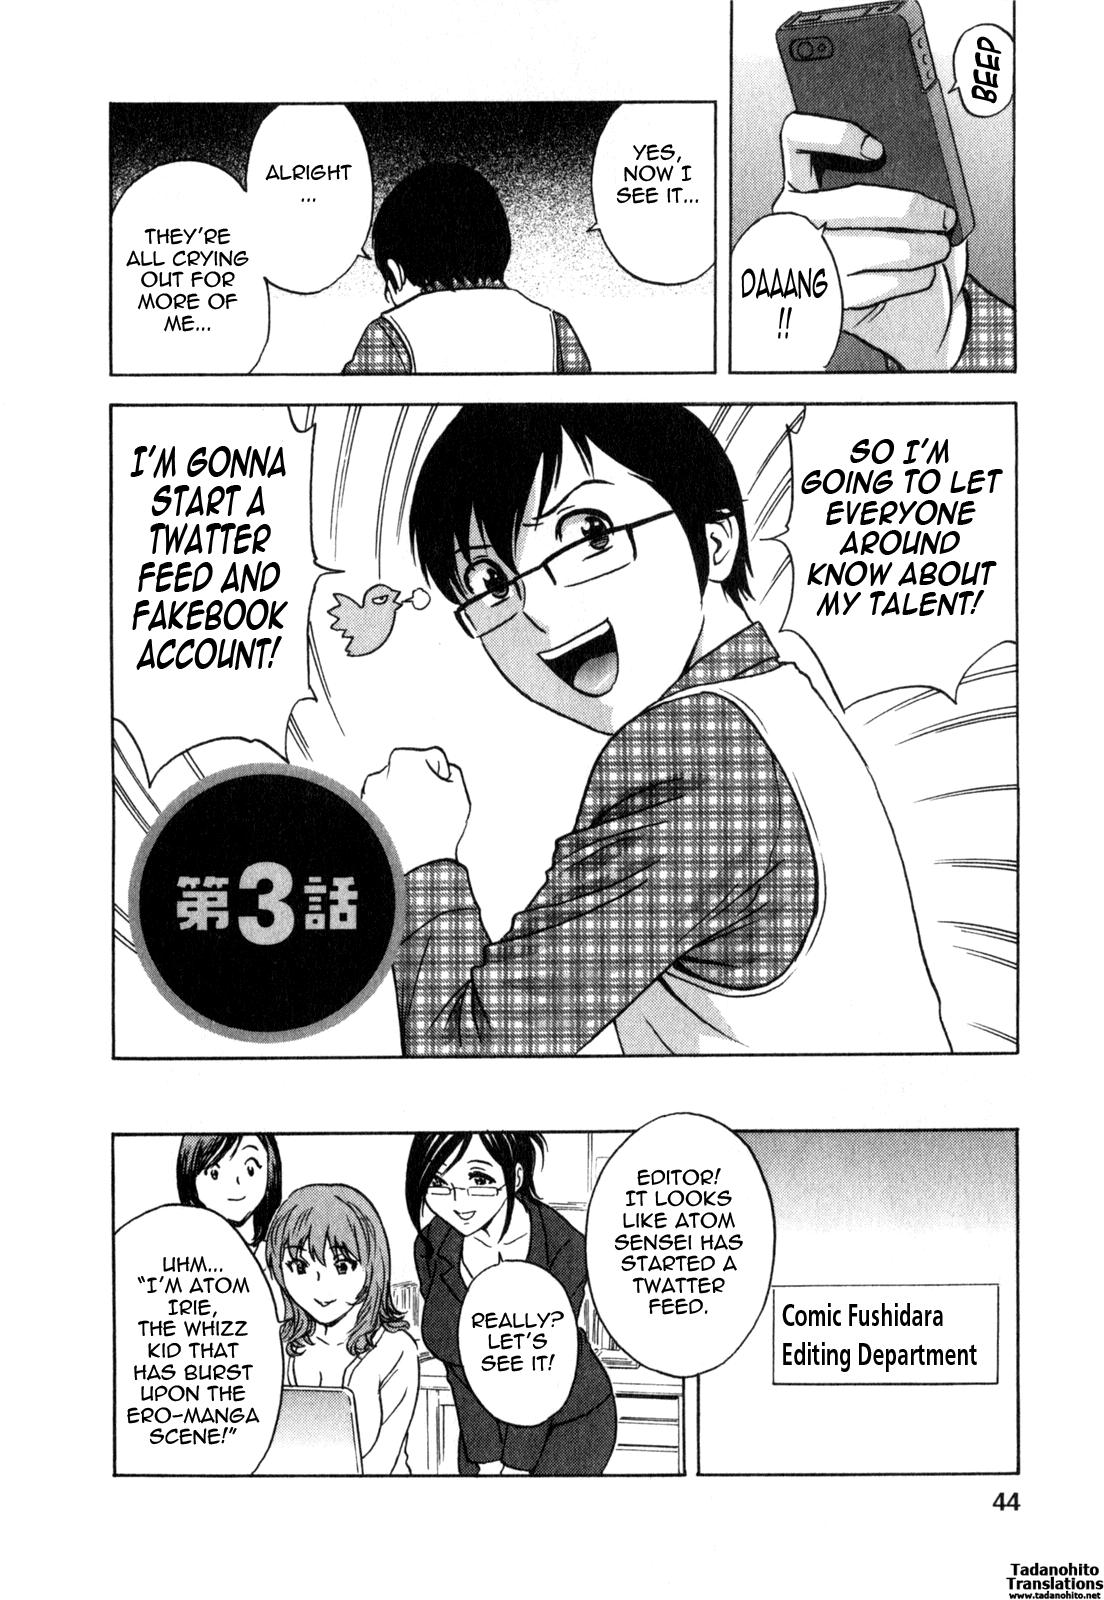 [Hidemaru] Life with Married Women Just Like a Manga 3 - Ch. 1-4 [English] {Tadanohito} 47